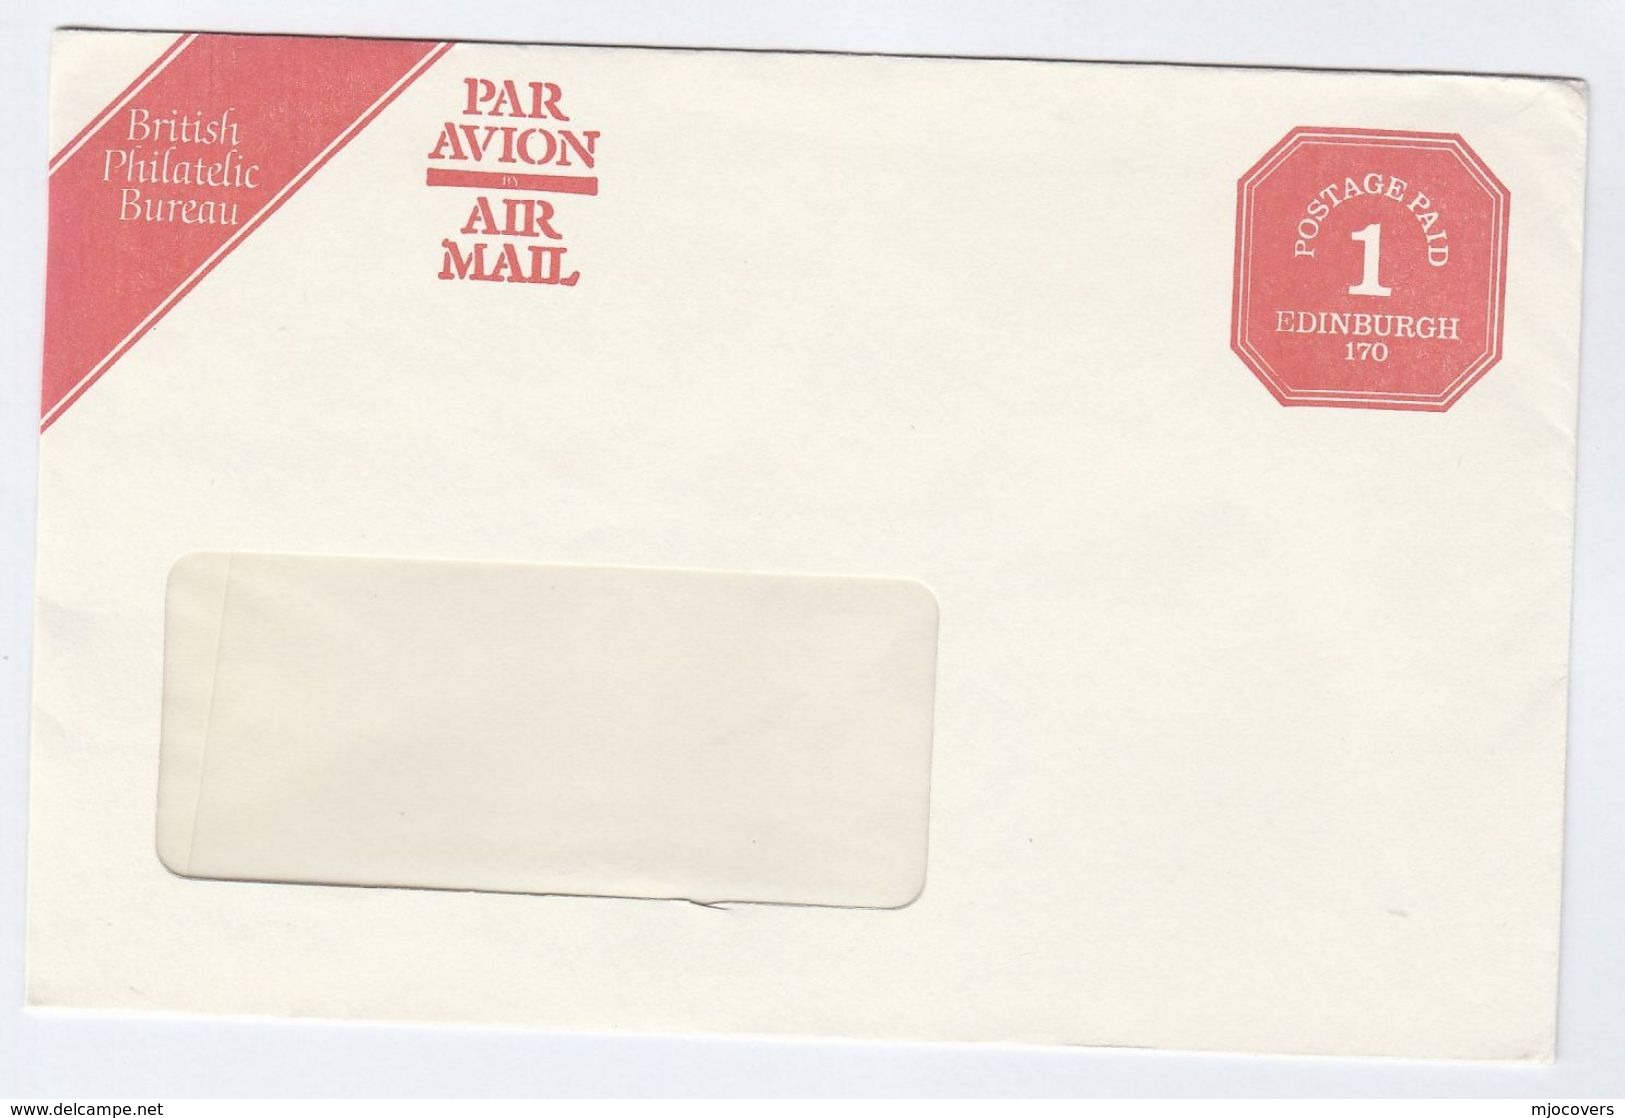 COVER Air Mail POSTAGE PAID 1 EDINBURGH 170 British Philatelic Bureau Postage Stationery GB - Briefe U. Dokumente